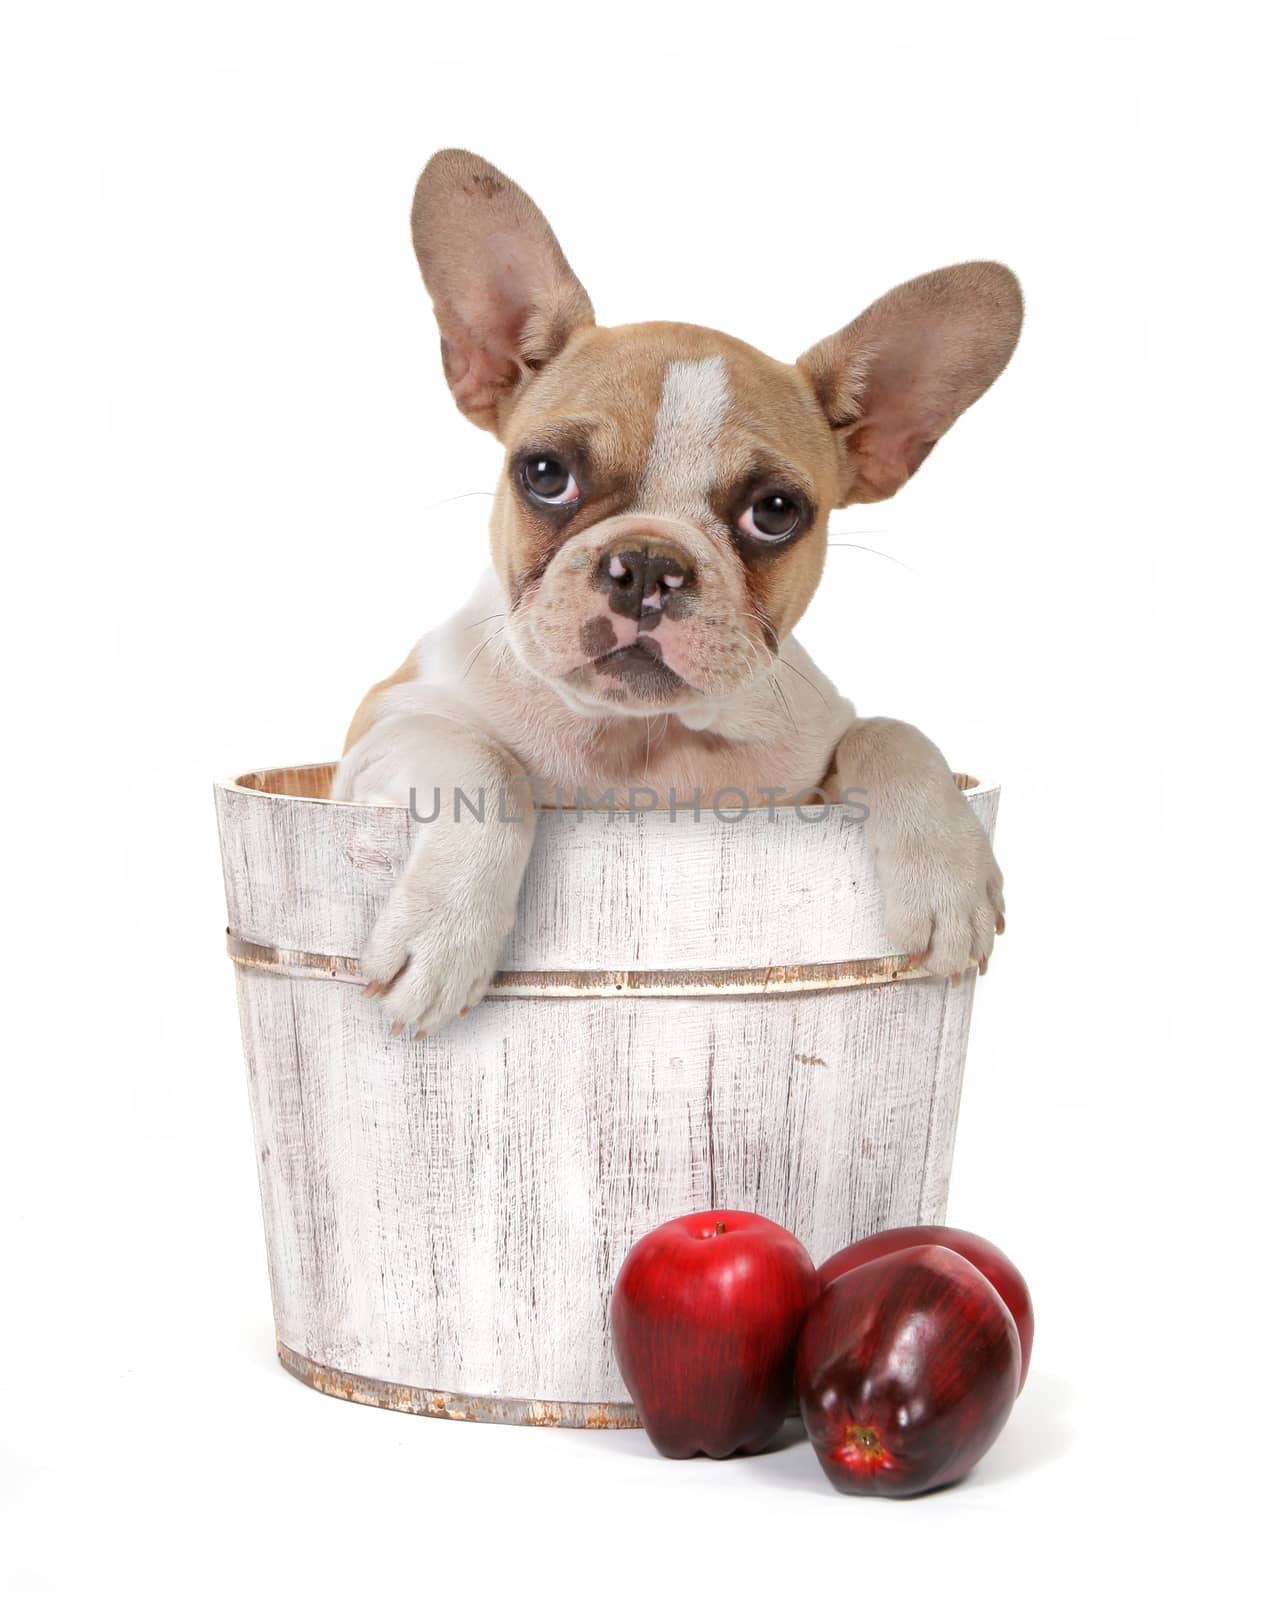 Adorable Puppy Dog In an Apple Barrel Studio Shot